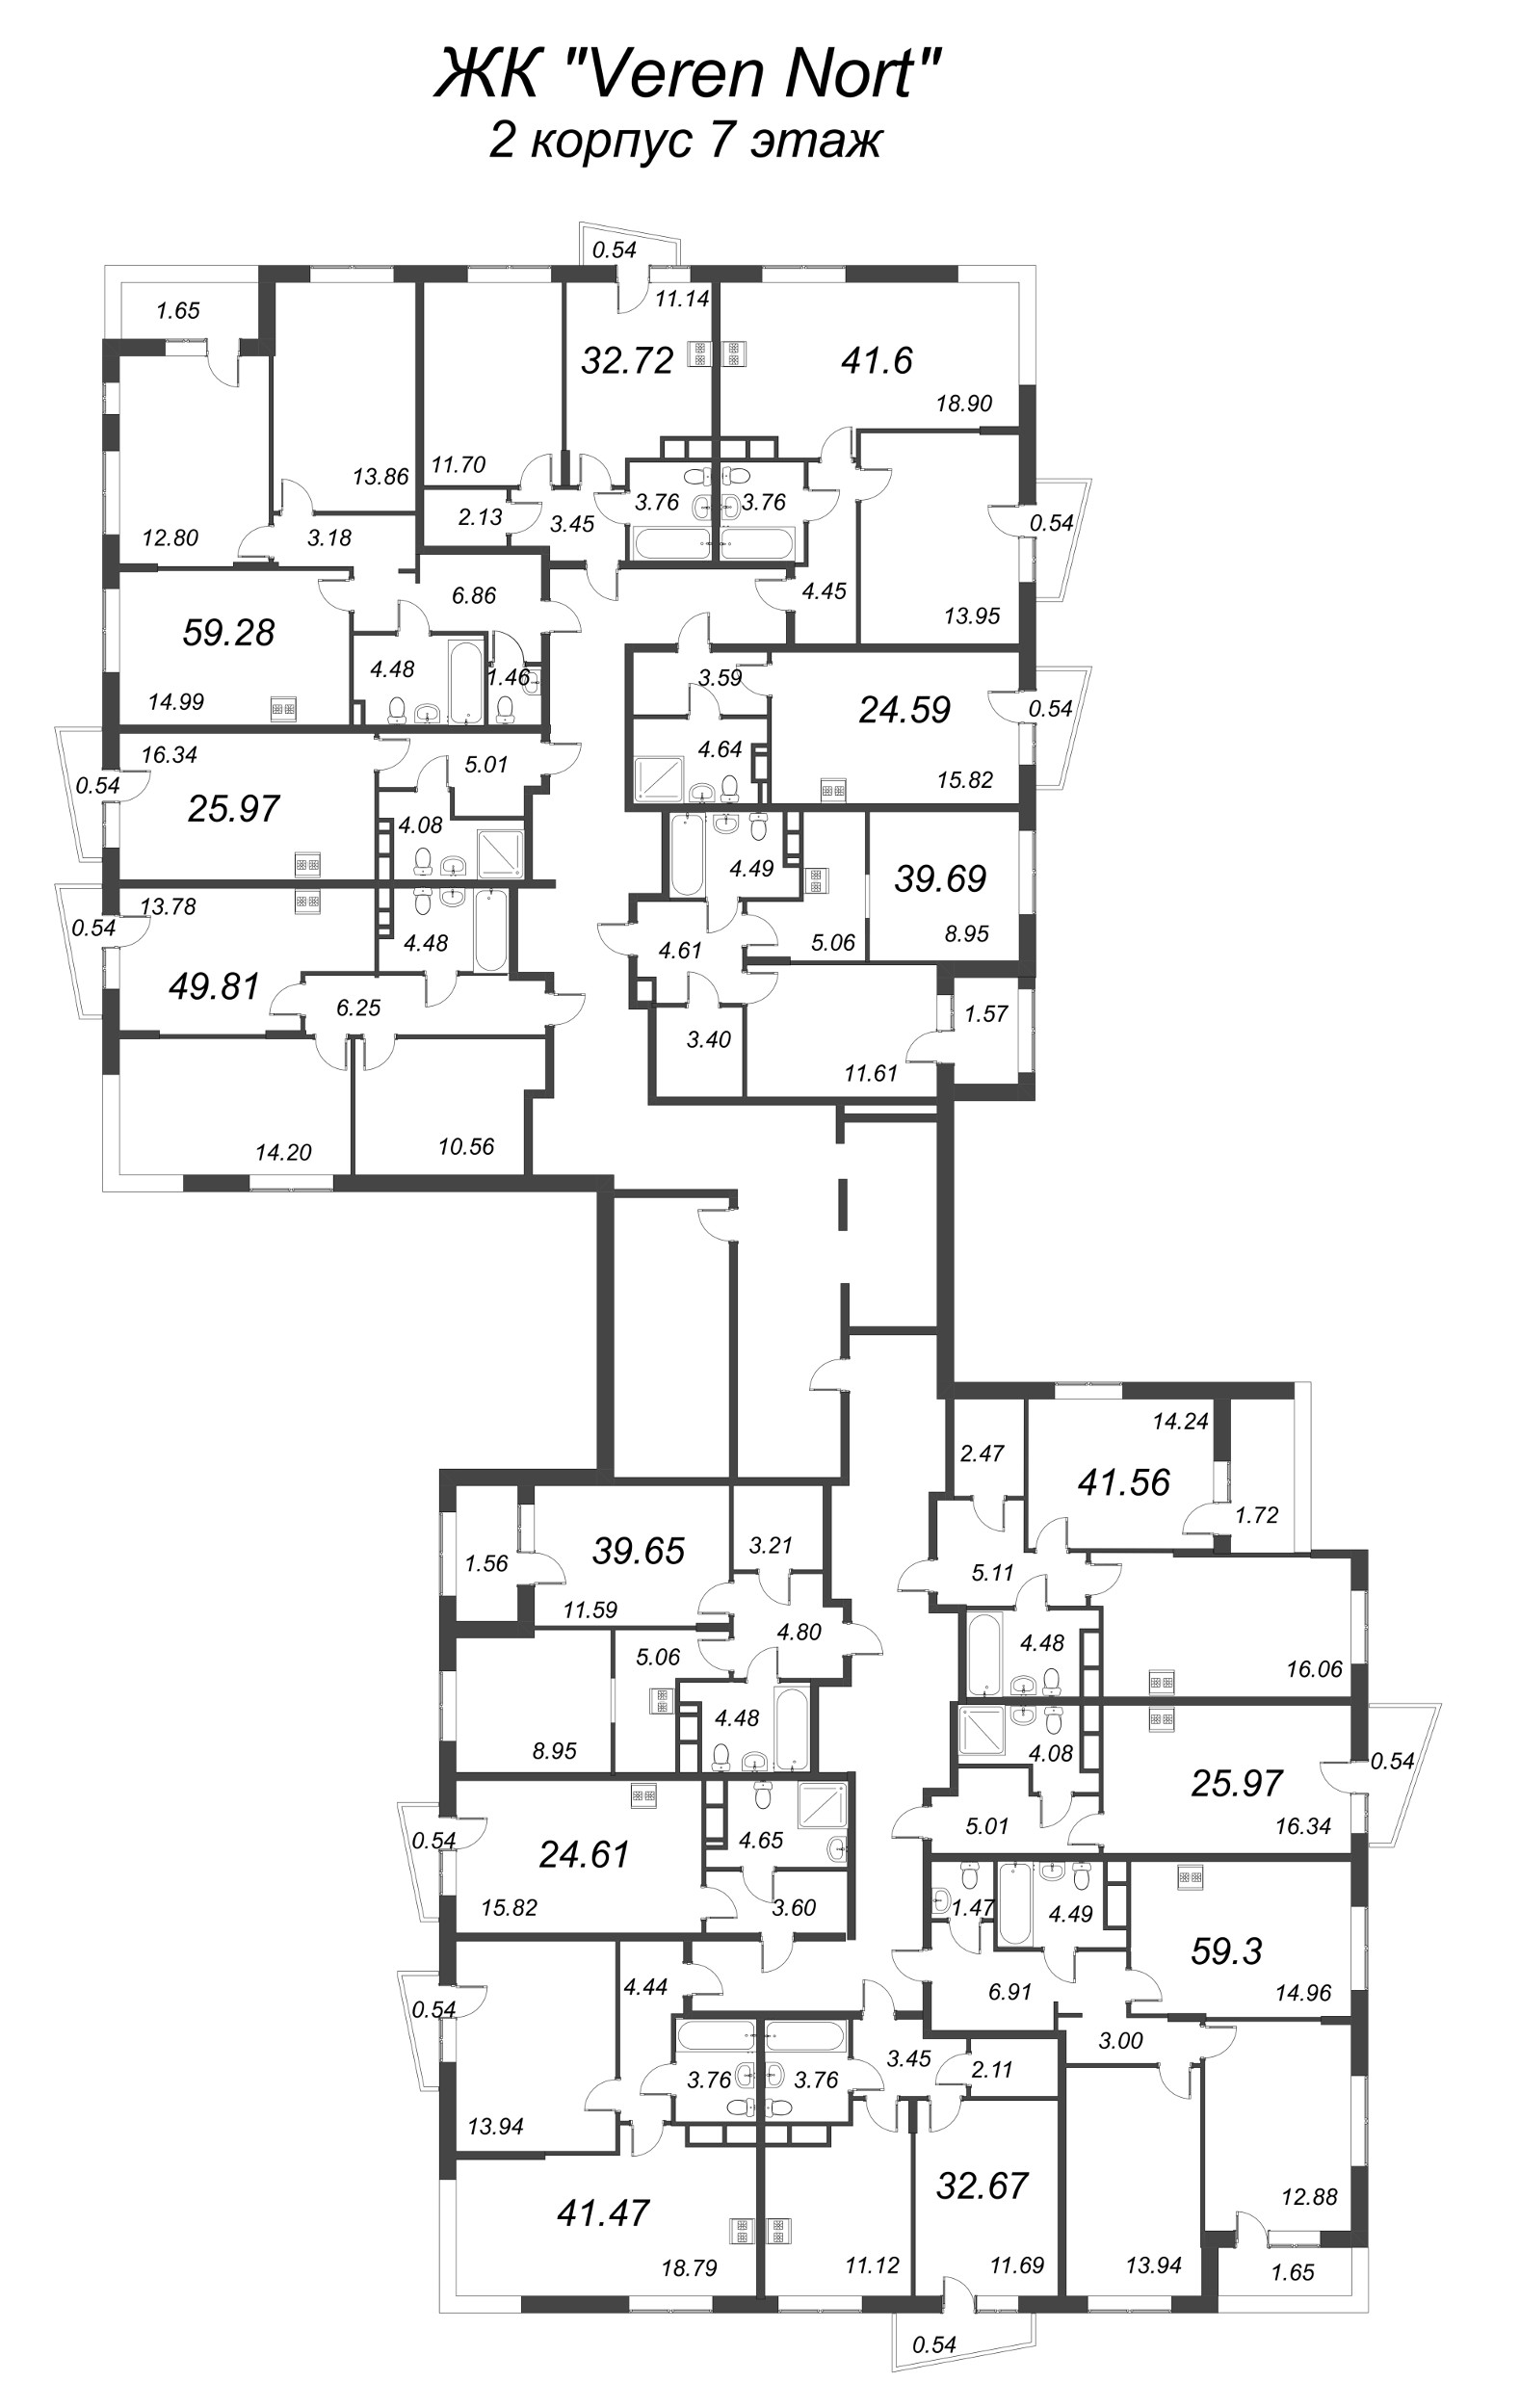 3-комнатная (Евро) квартира, 59.28 м² - планировка этажа